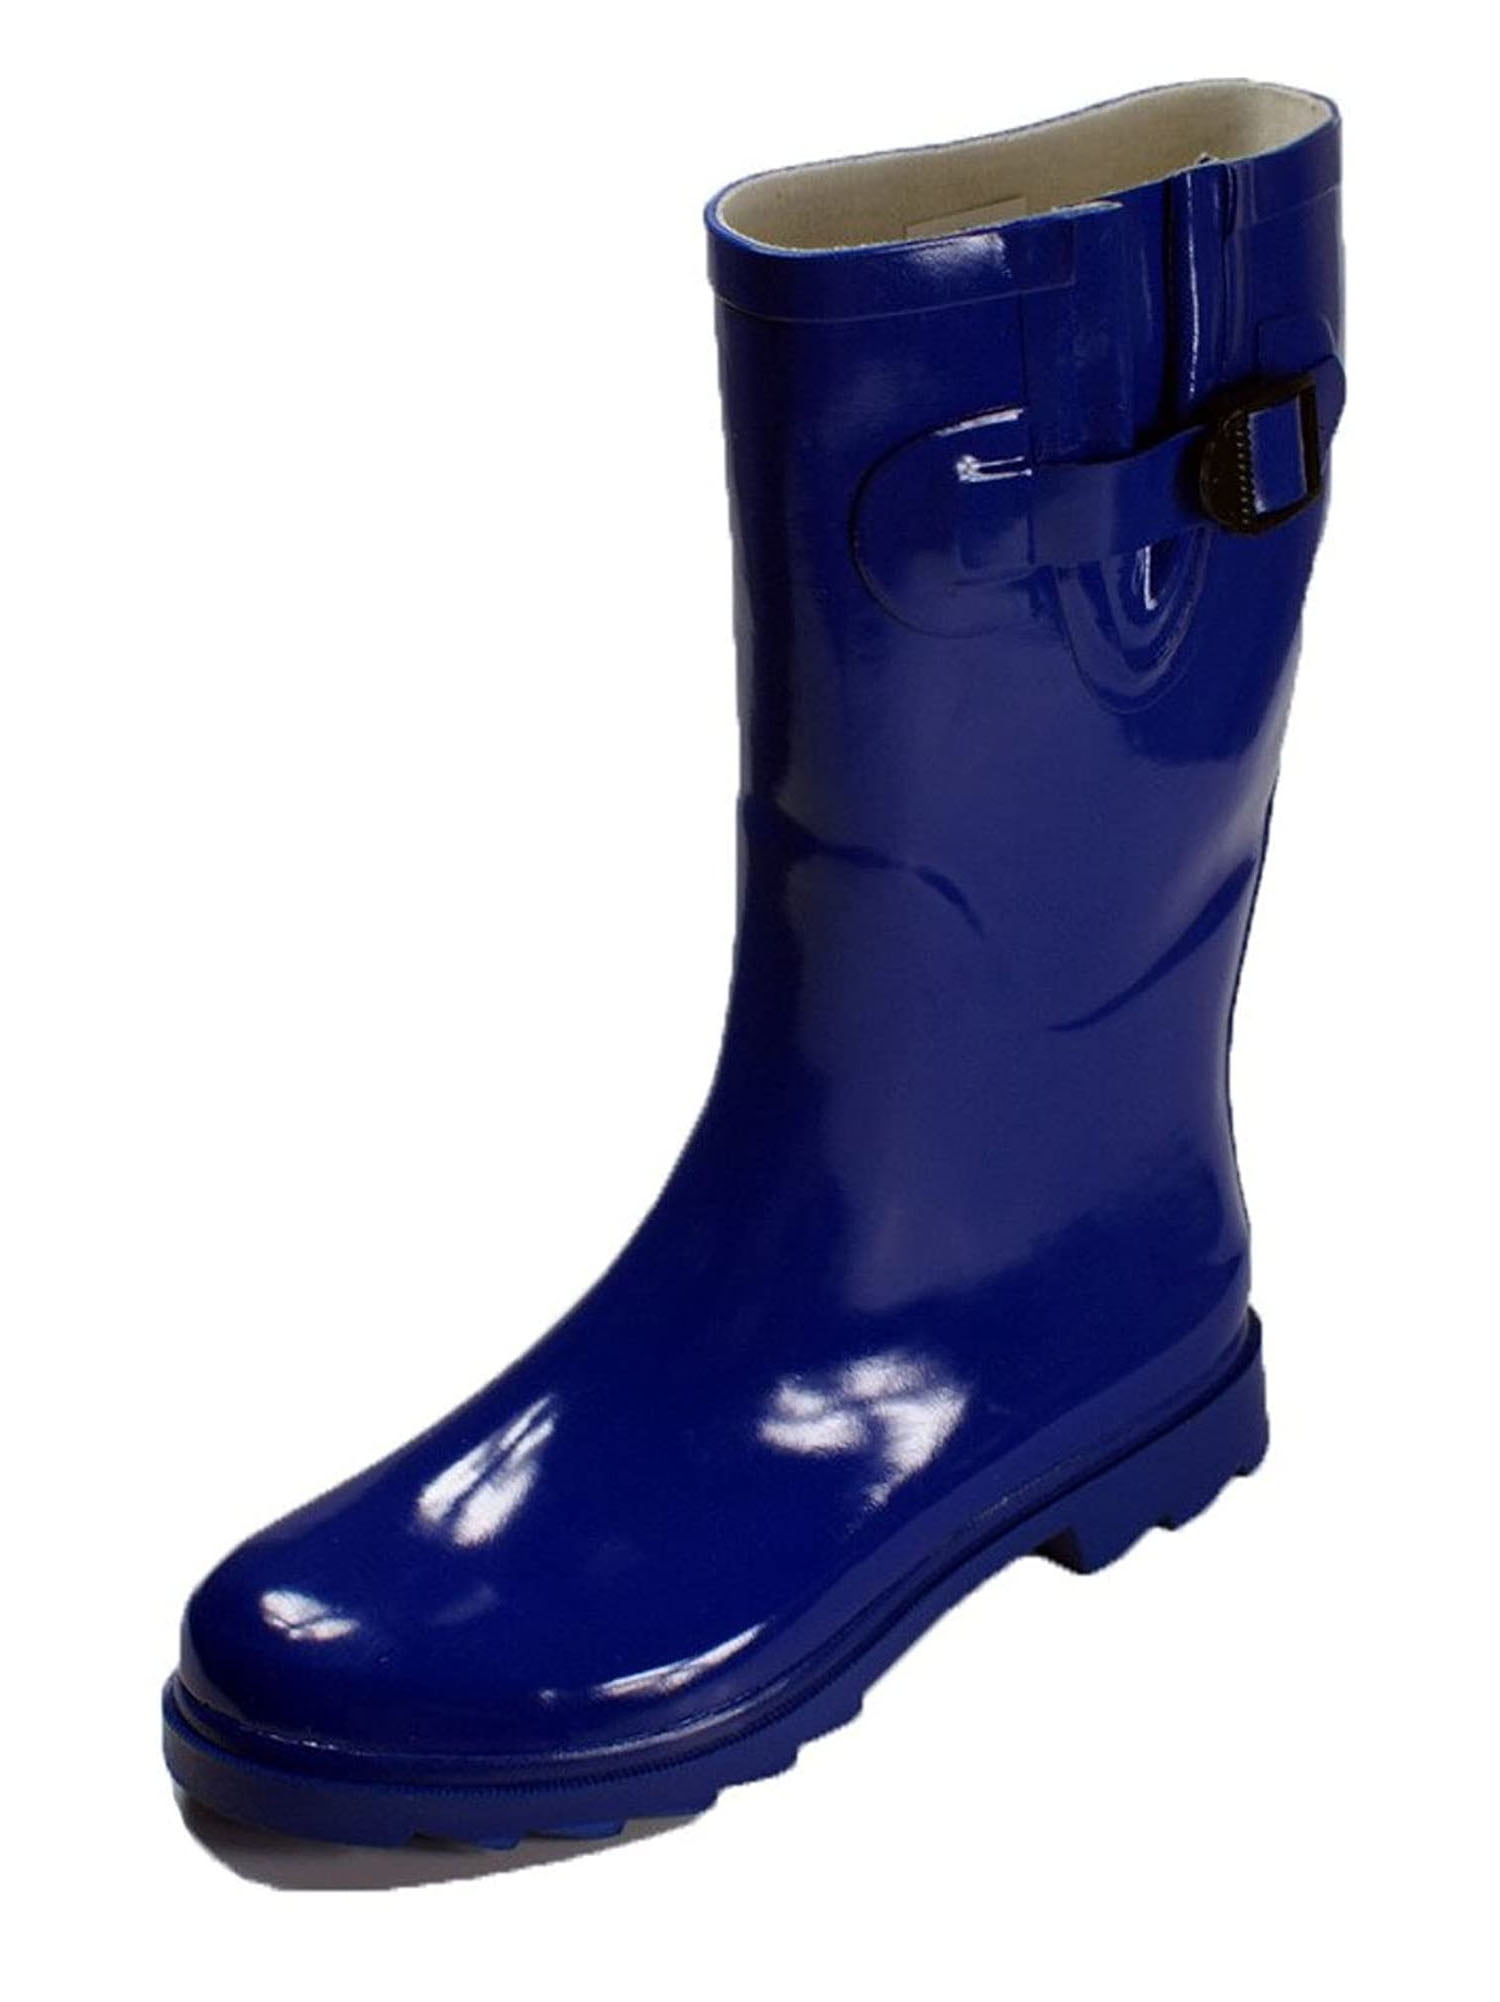 Tanleewa Non Slip Rubber Rain Boots For Women Waterproof Rain Garden